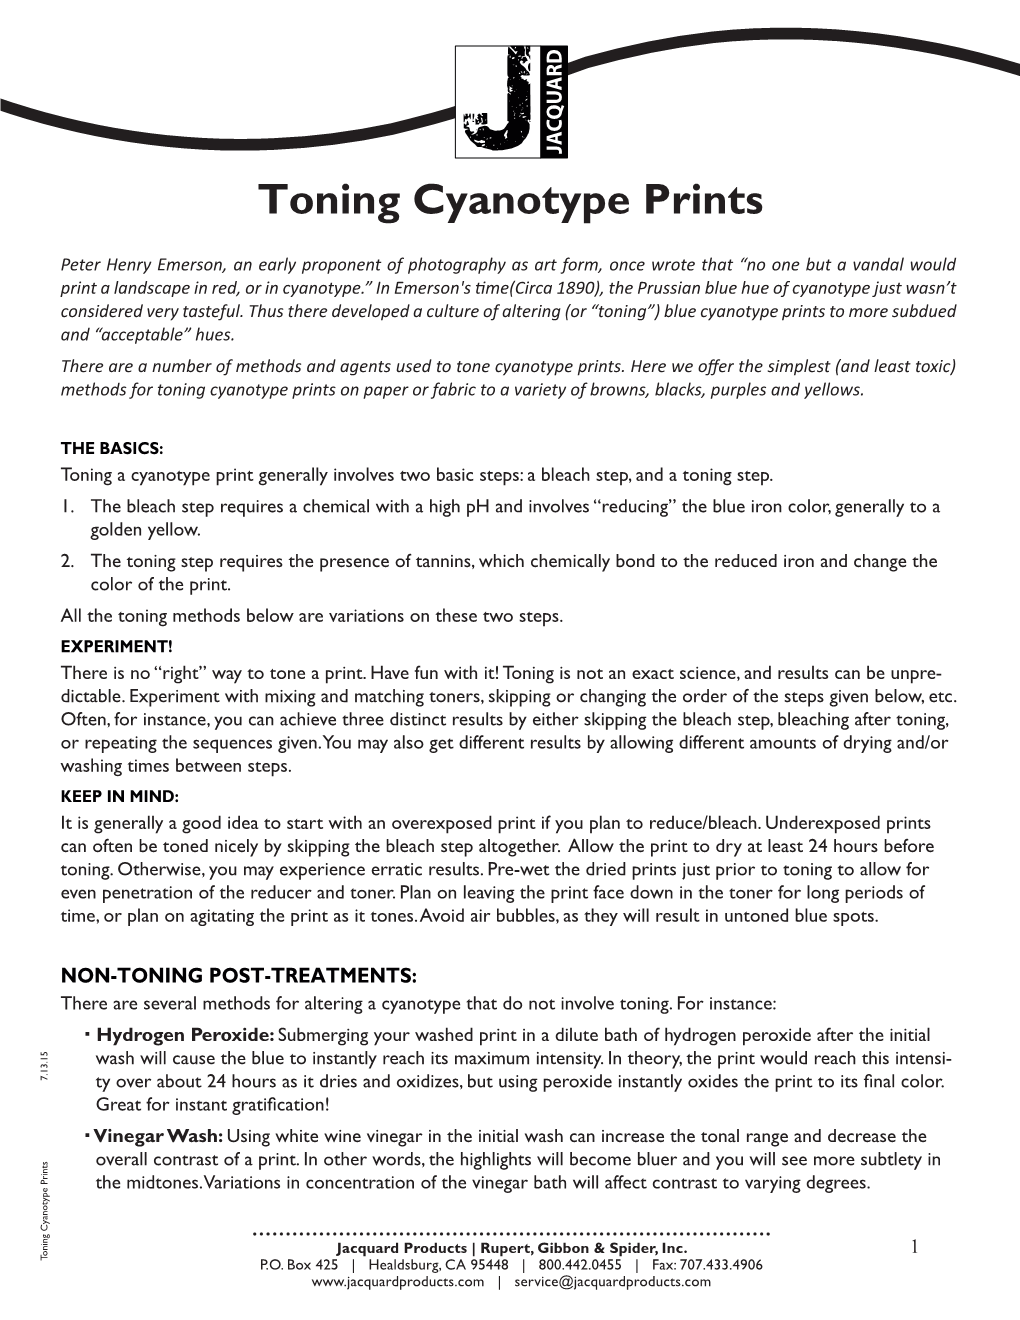 Toning Cyanotype Prints